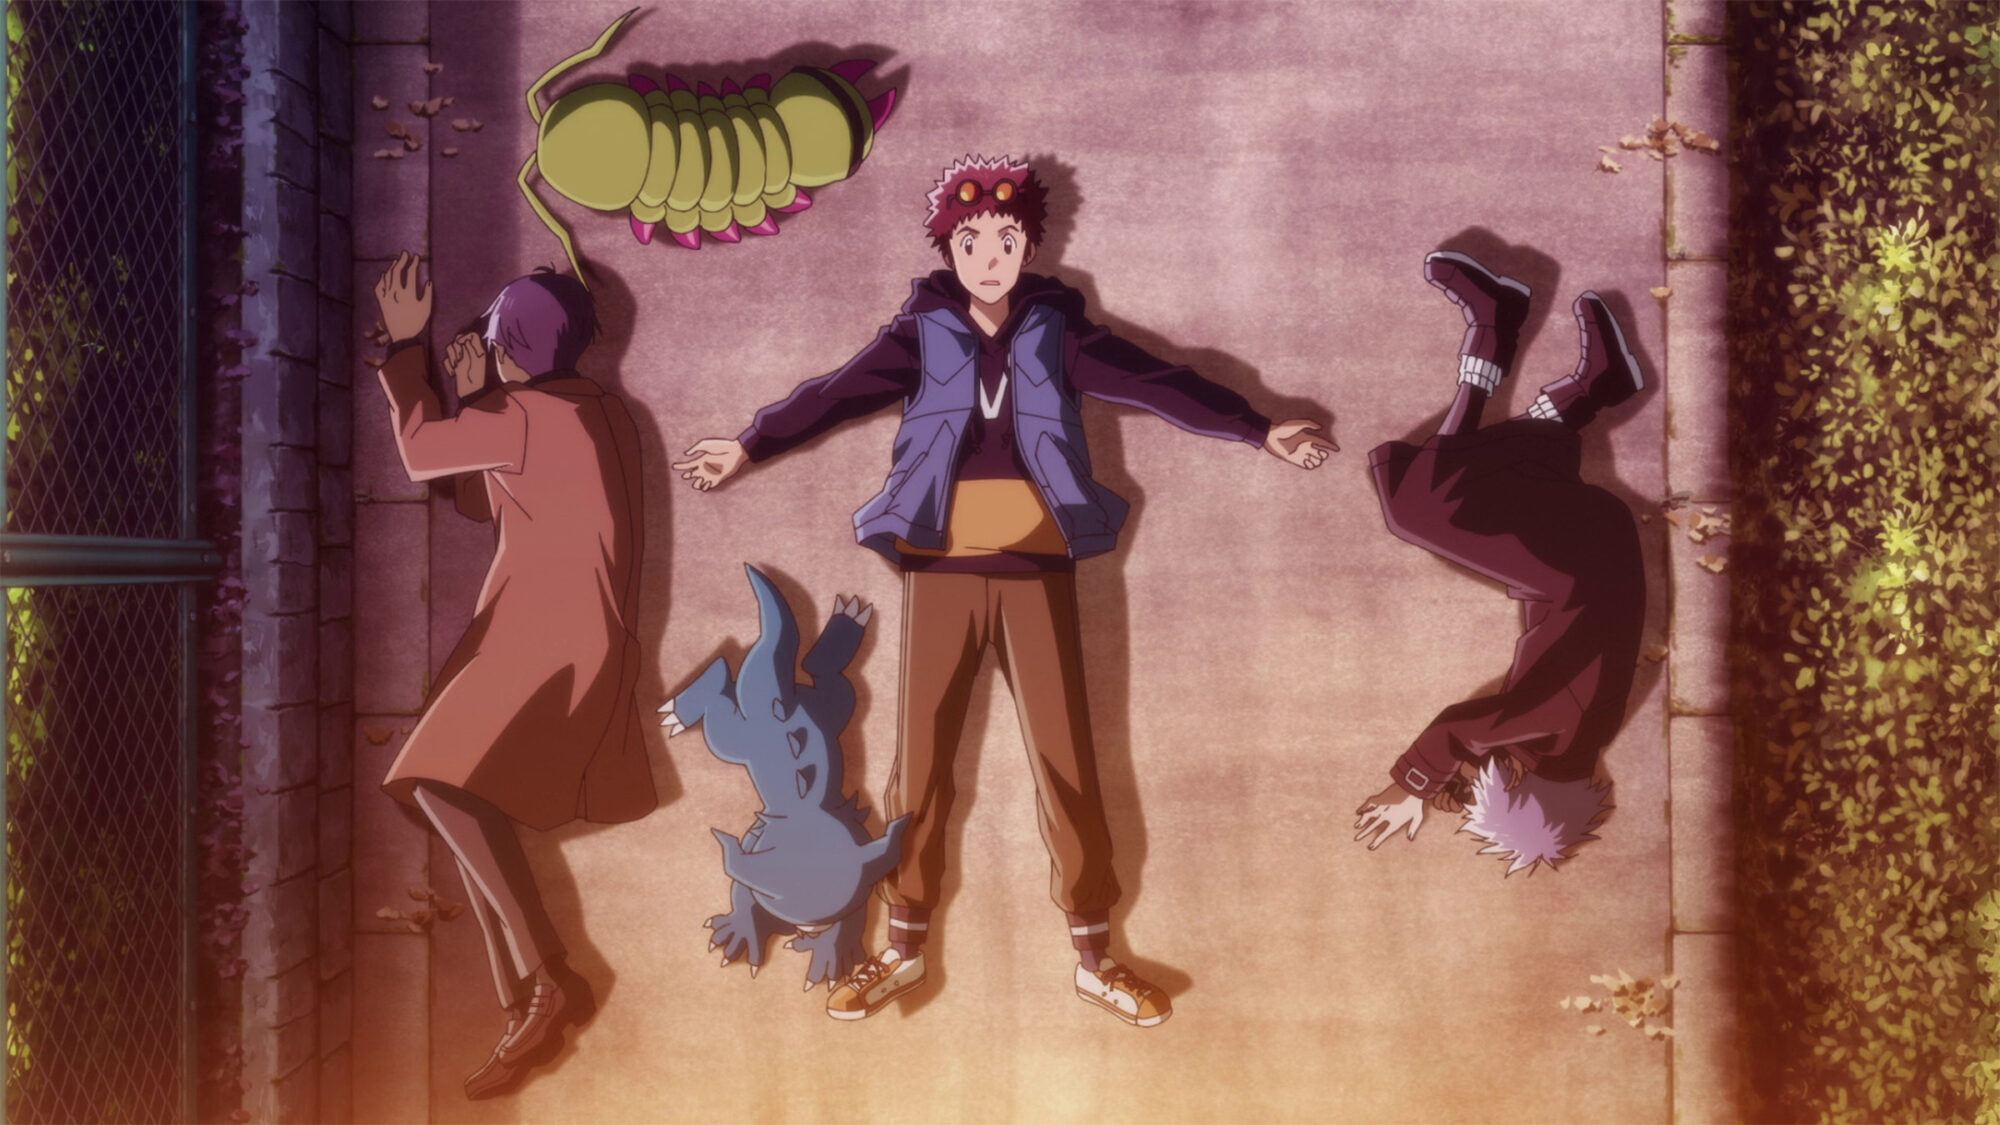 Digimon Adventure 02 The Beginning Movie